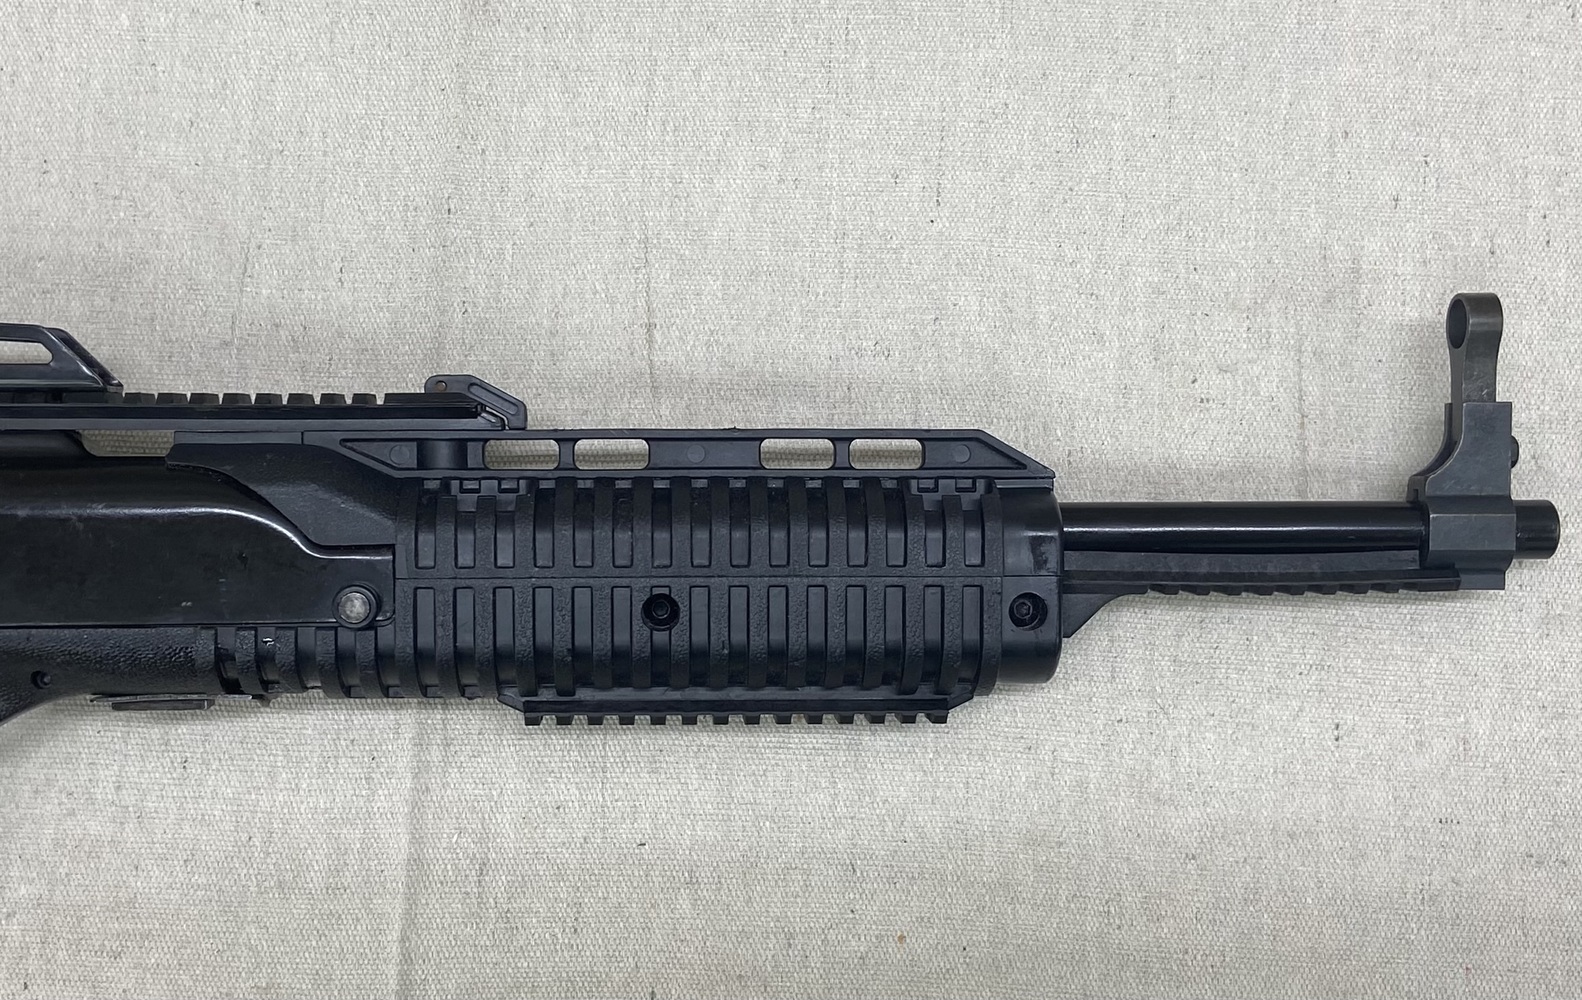 HI-POINT 995 9mm carbine rifle